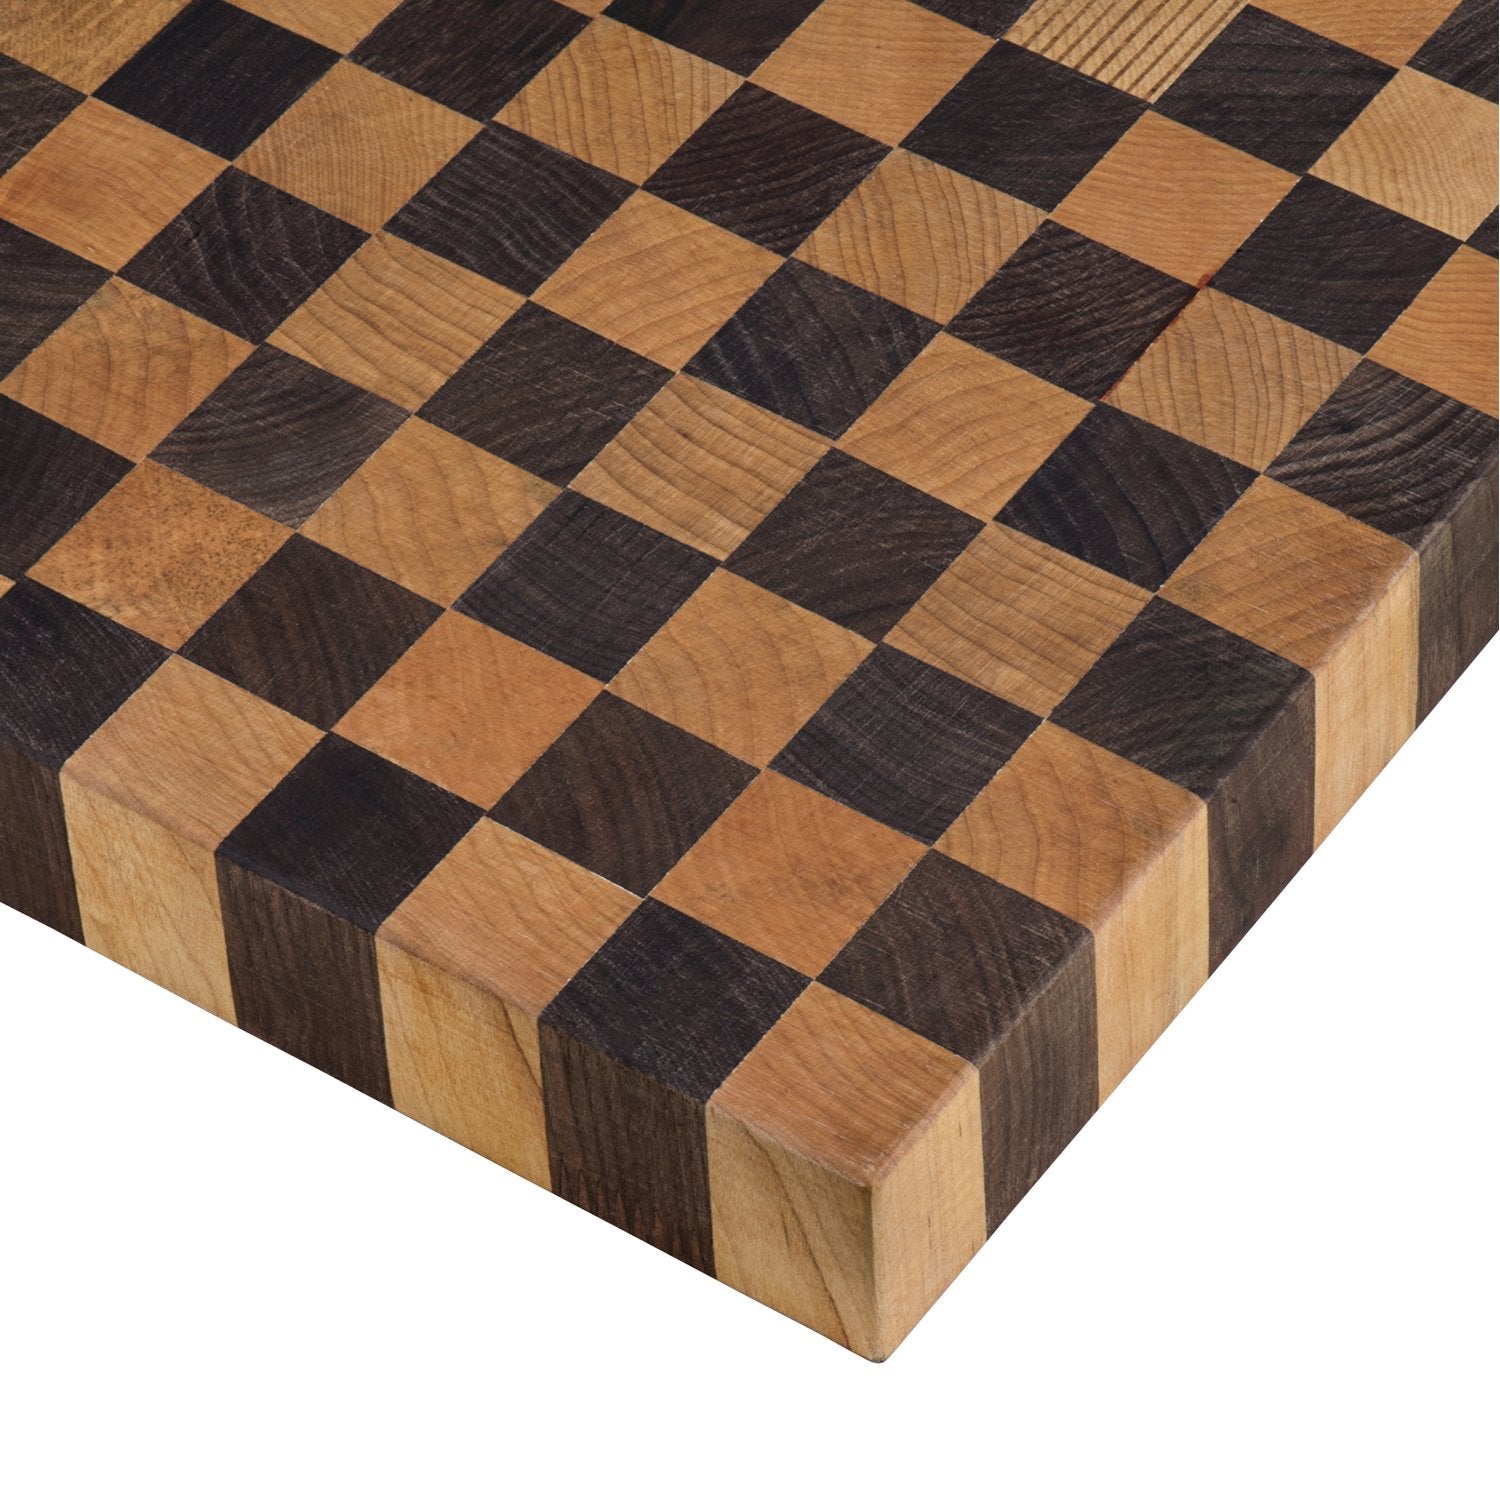 Ruvati 2" Thick End-Grain American Walnut and Maple Checkered Butcher Block 17" x 16" Cutting Board RVA2445CHK